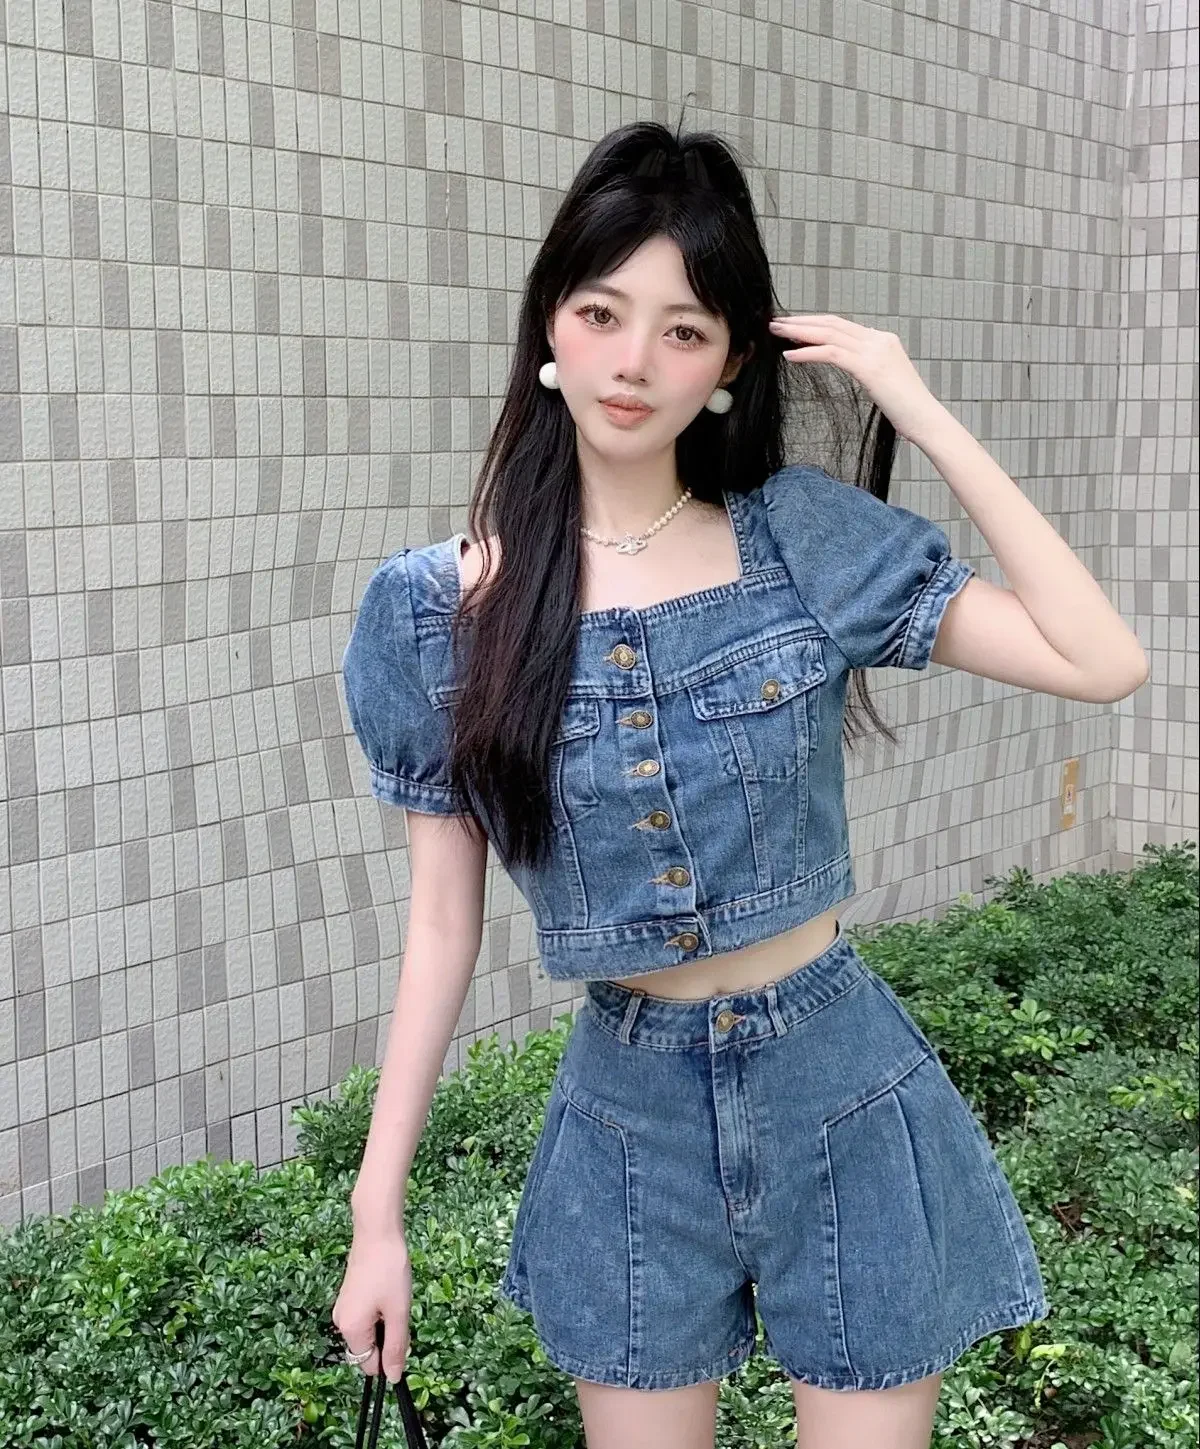 Women's Summer Shorts Suit Korean Fashion Square Neck Denim Short Top Chic and Elegant Hight Waist Shorts for Women 2 Piece Sets